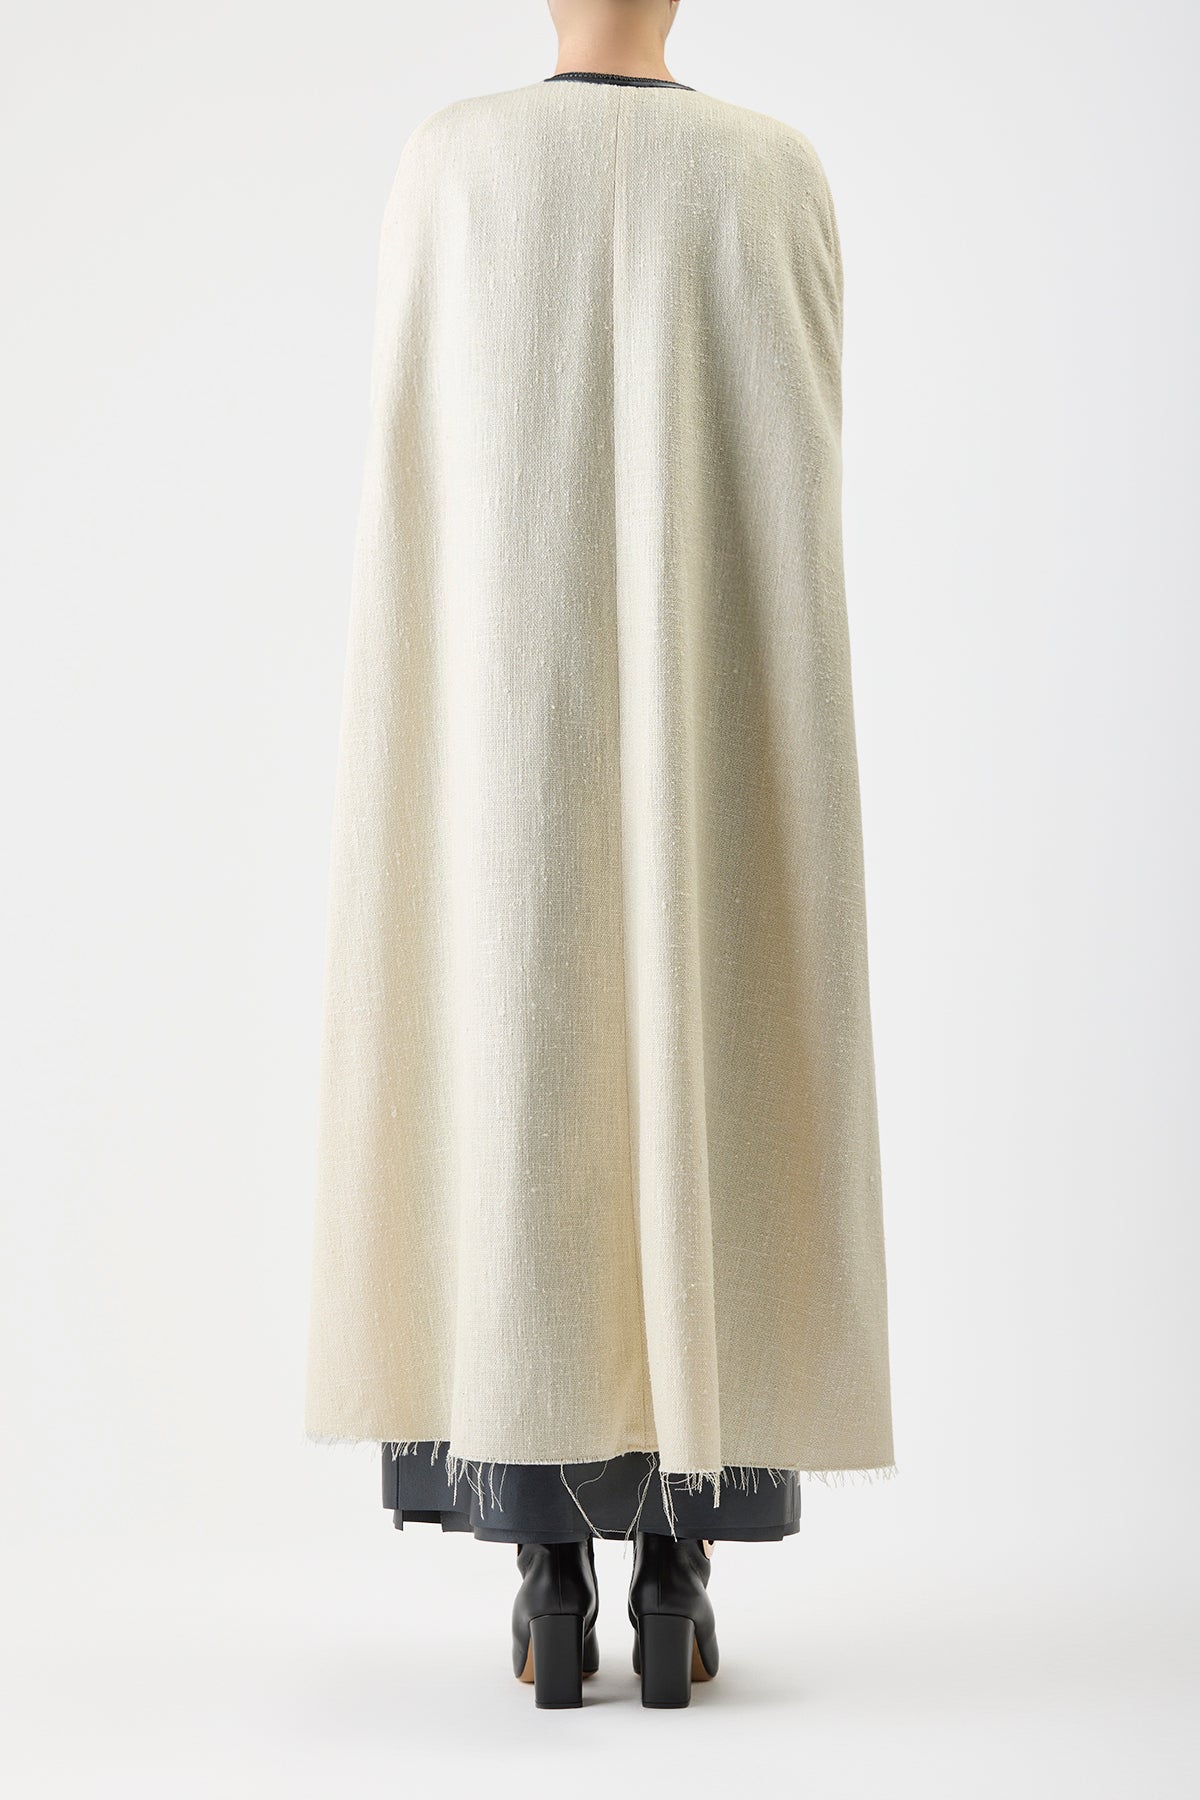 Glenys Cape in Ivory Silk Wool Slub with Metallic Nappa Leather Gilet